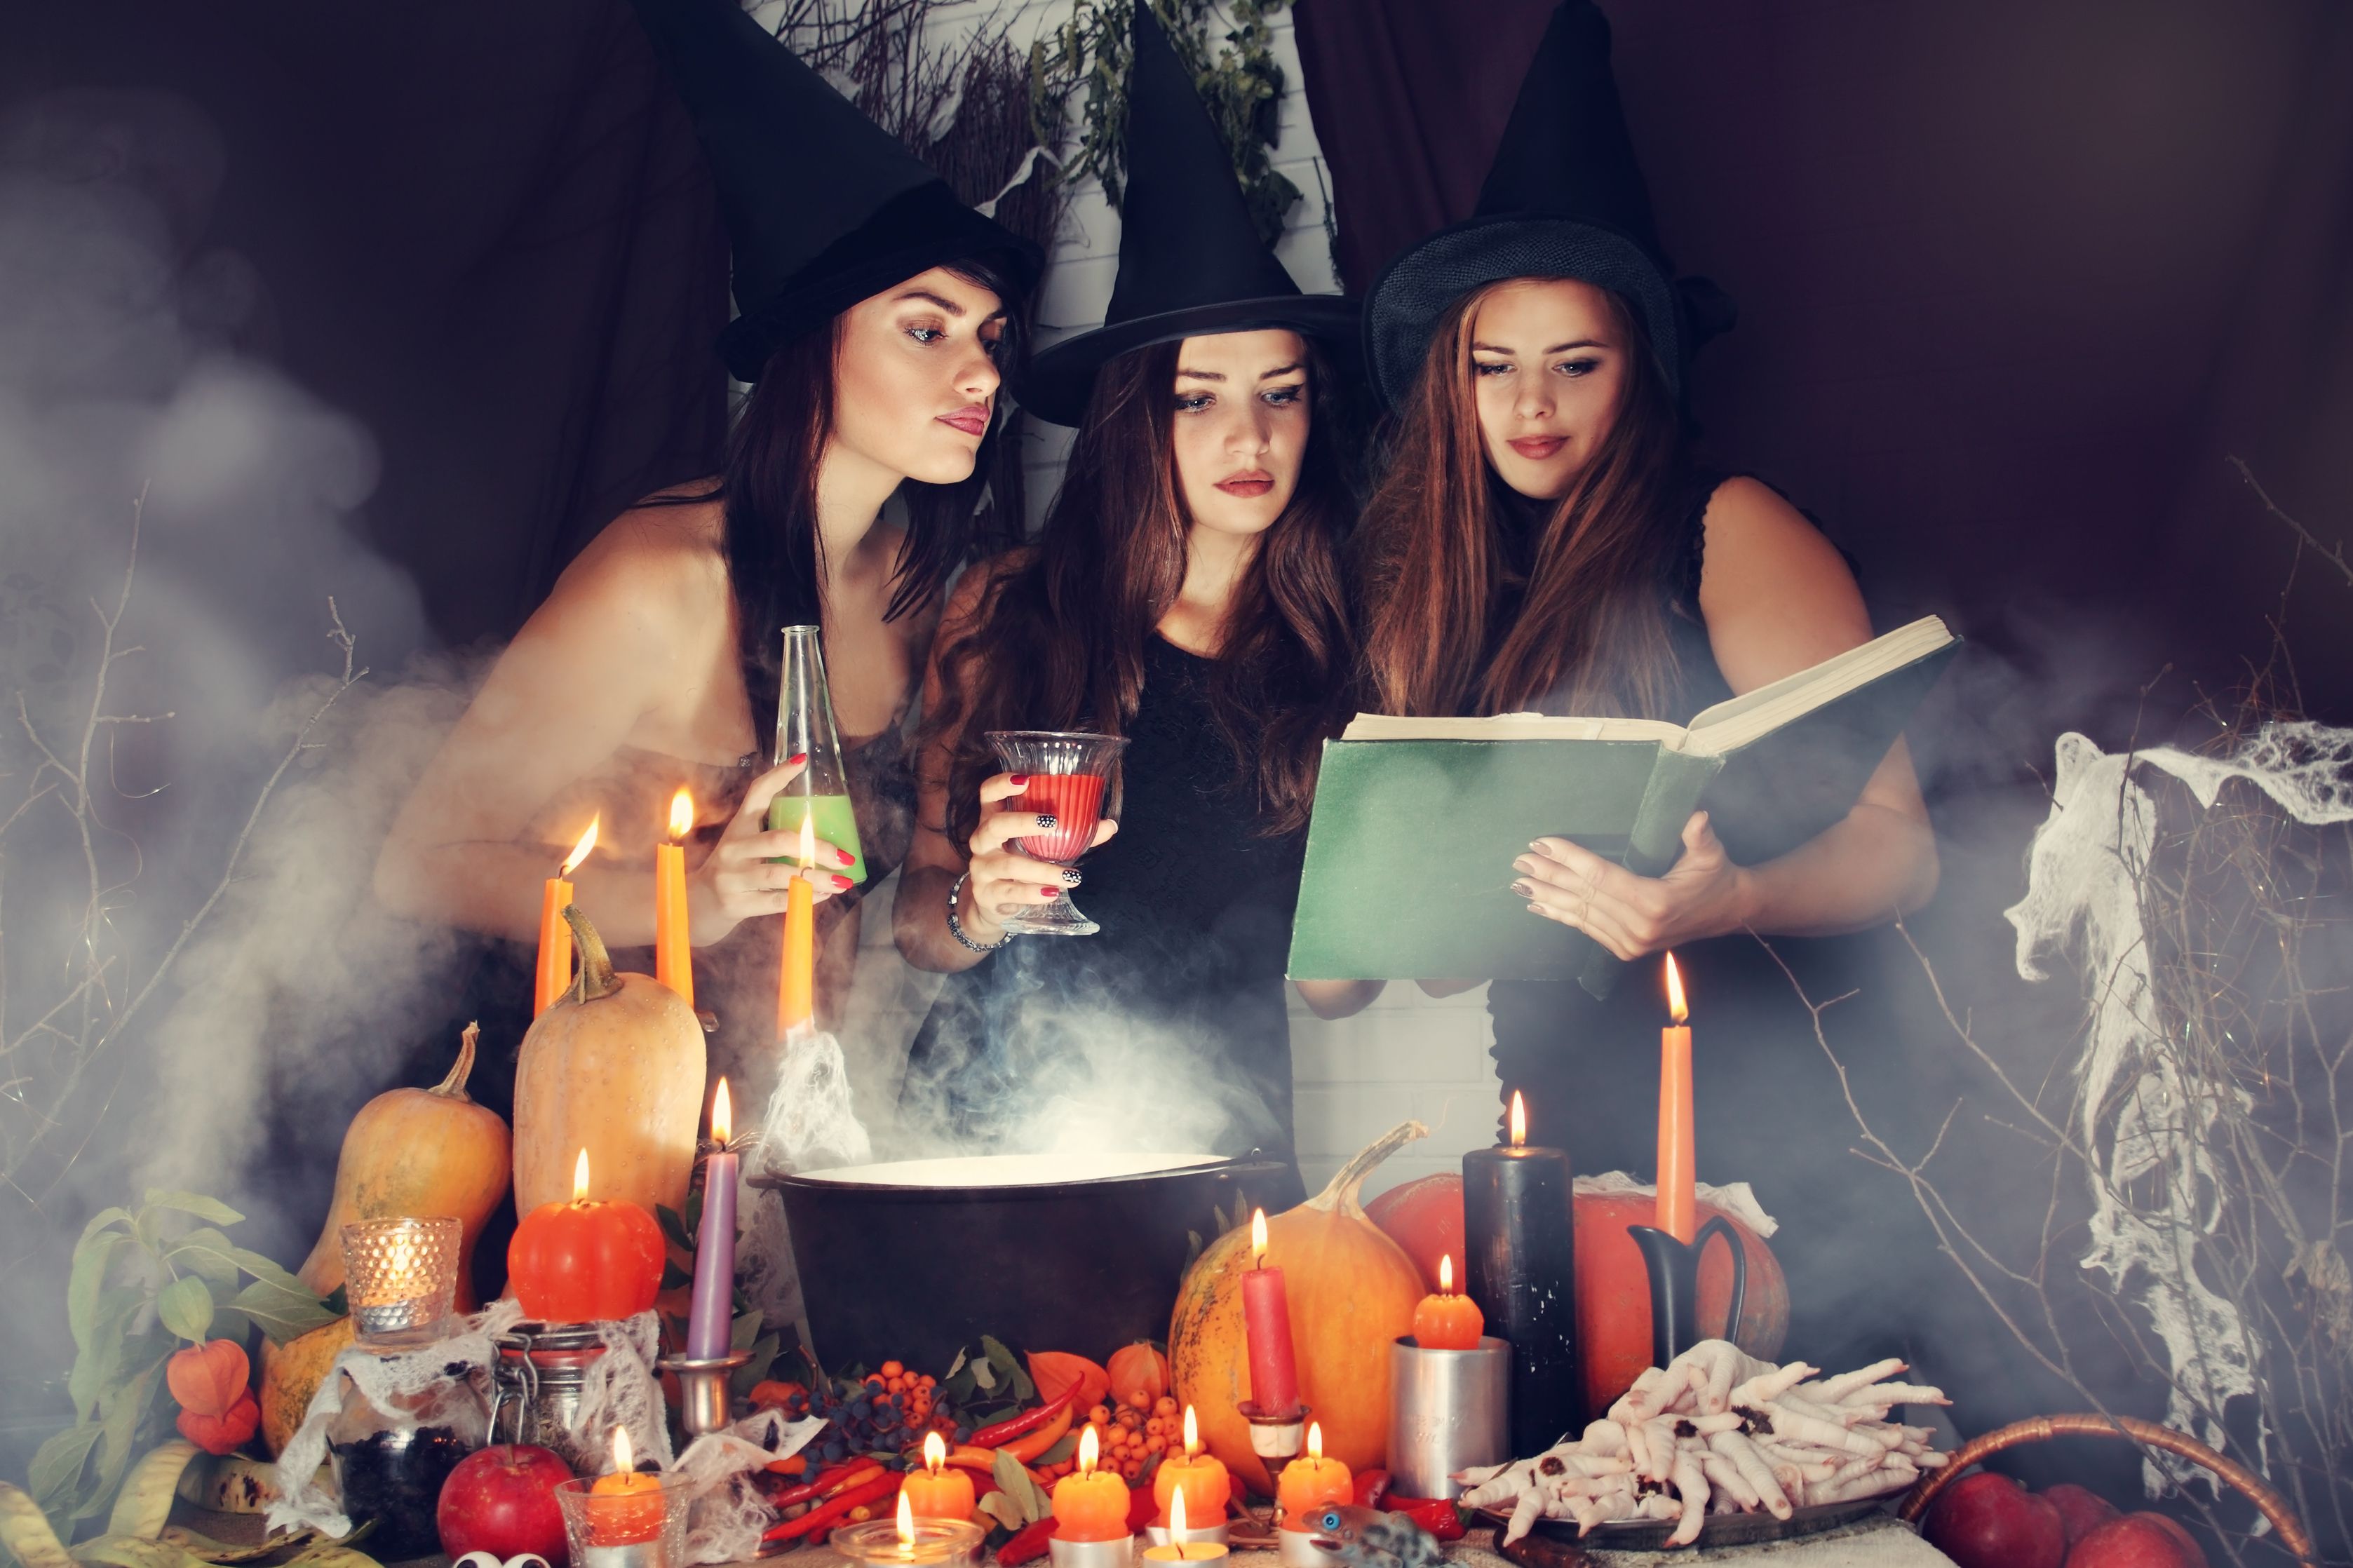 Best Trio Halloween Costume Ideas 2021 pic